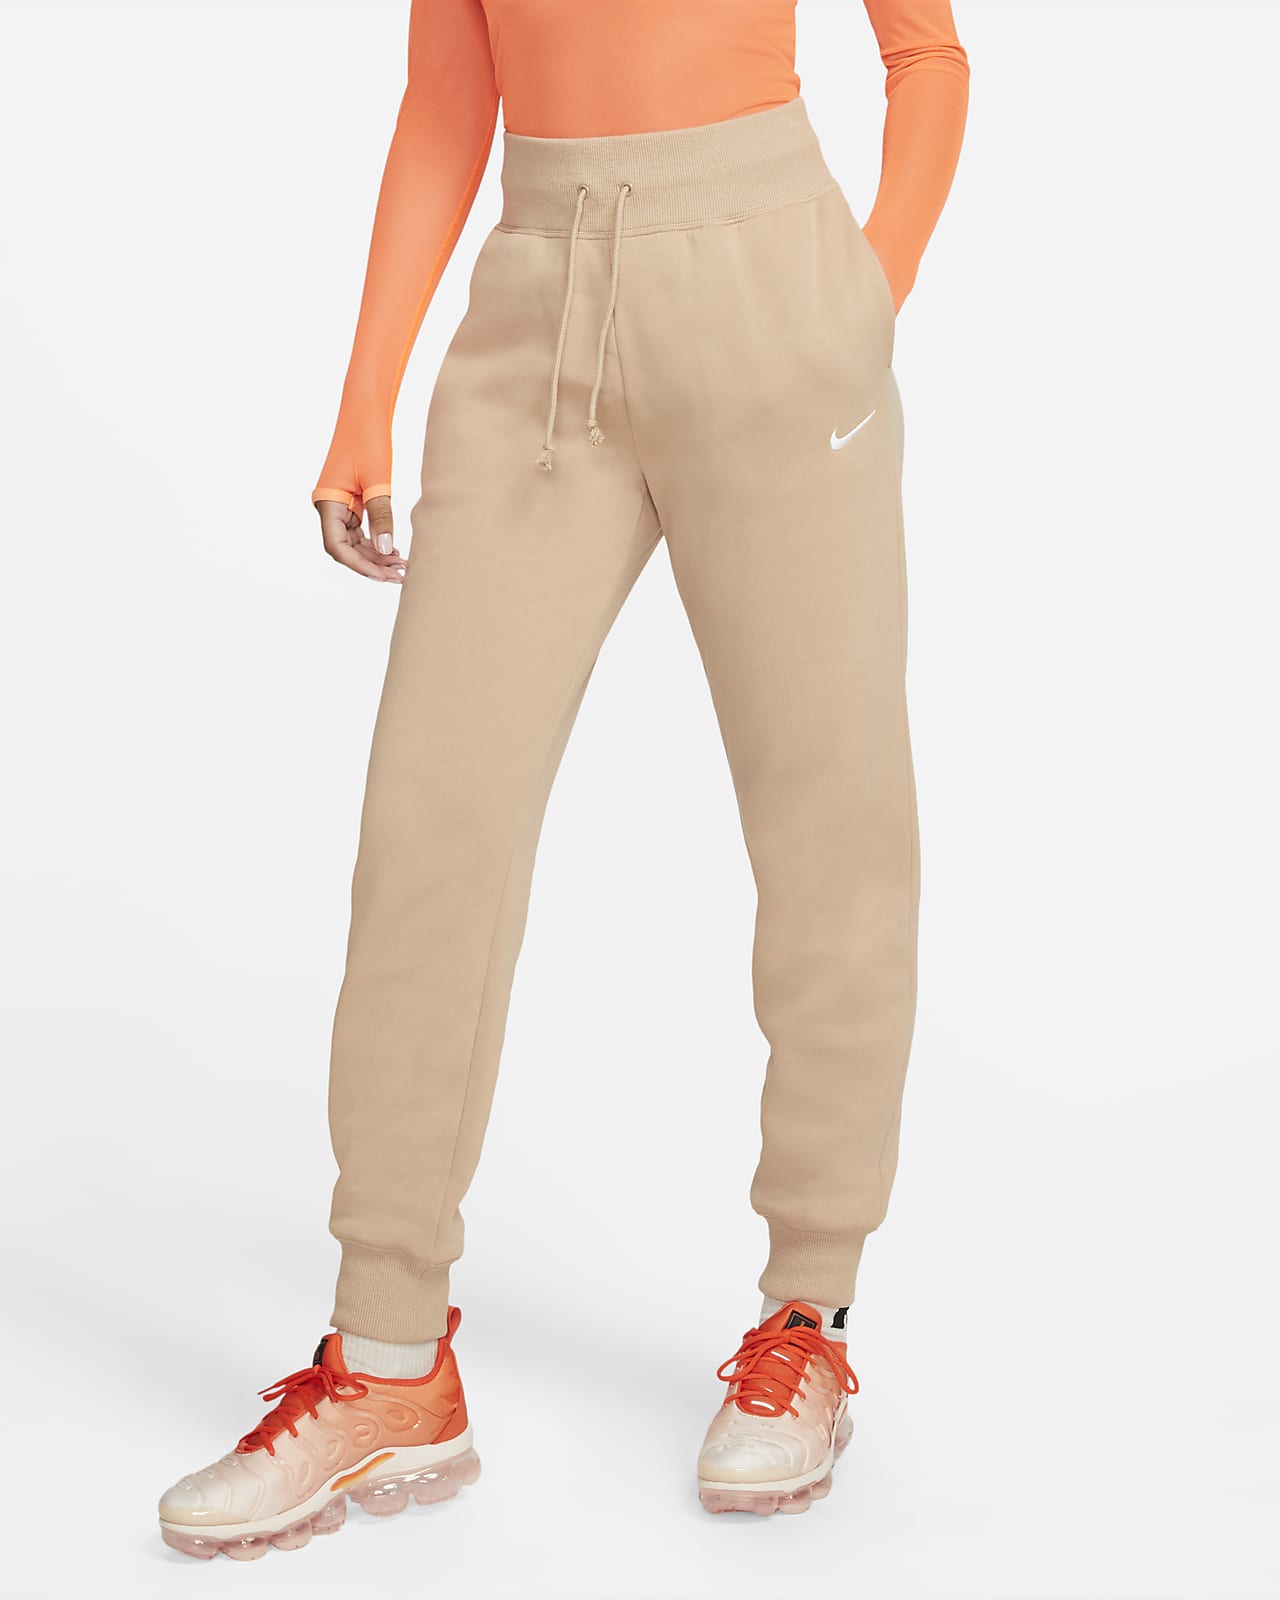 Women's Joggers & Sweatpants. Nike NL